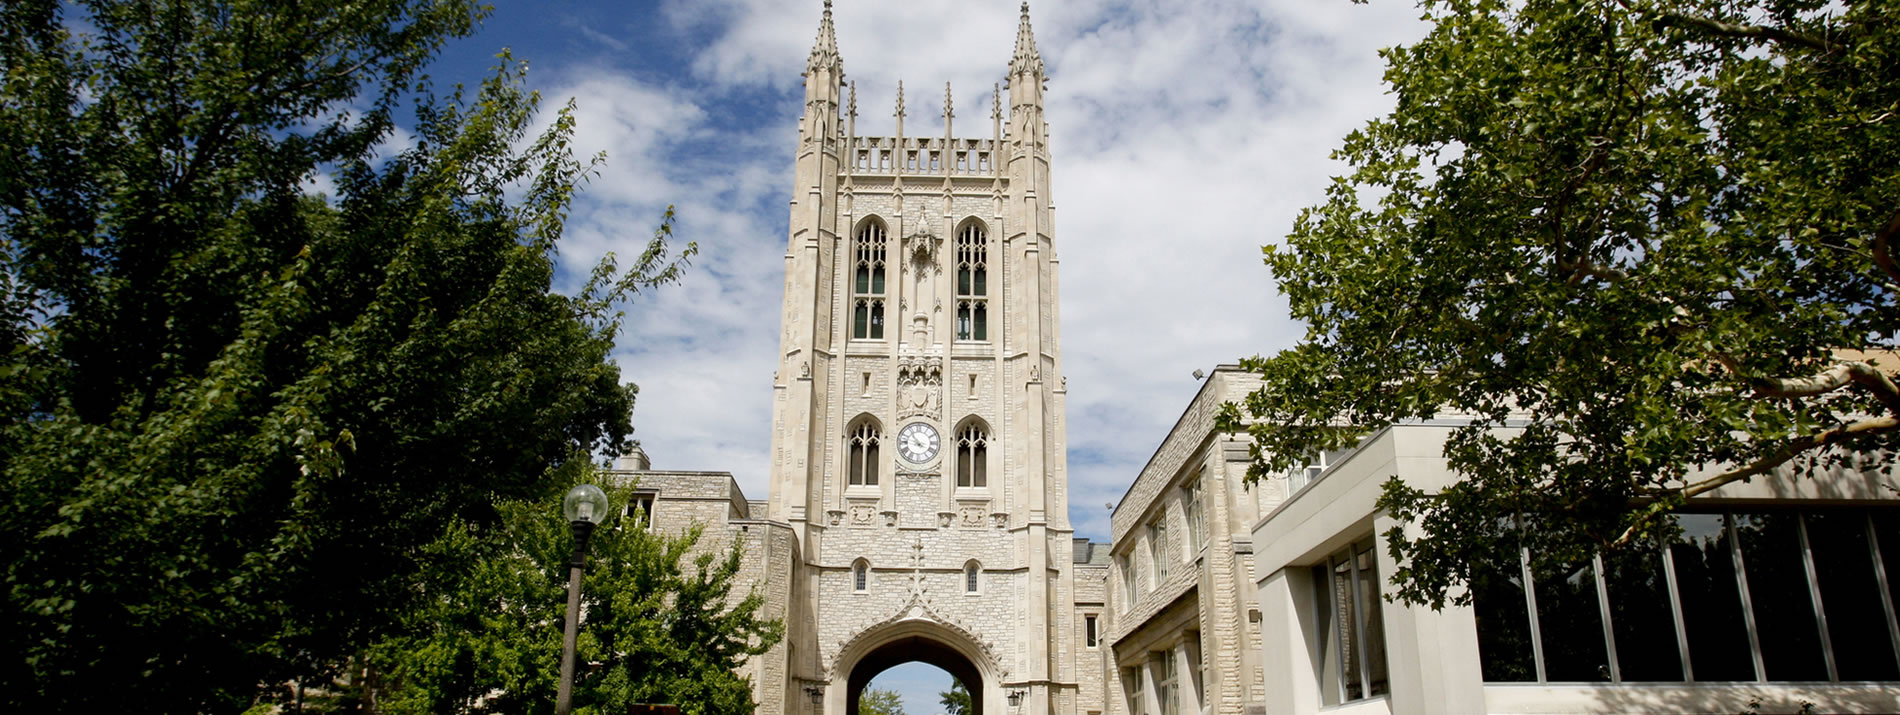 University of Missouri Graduate School